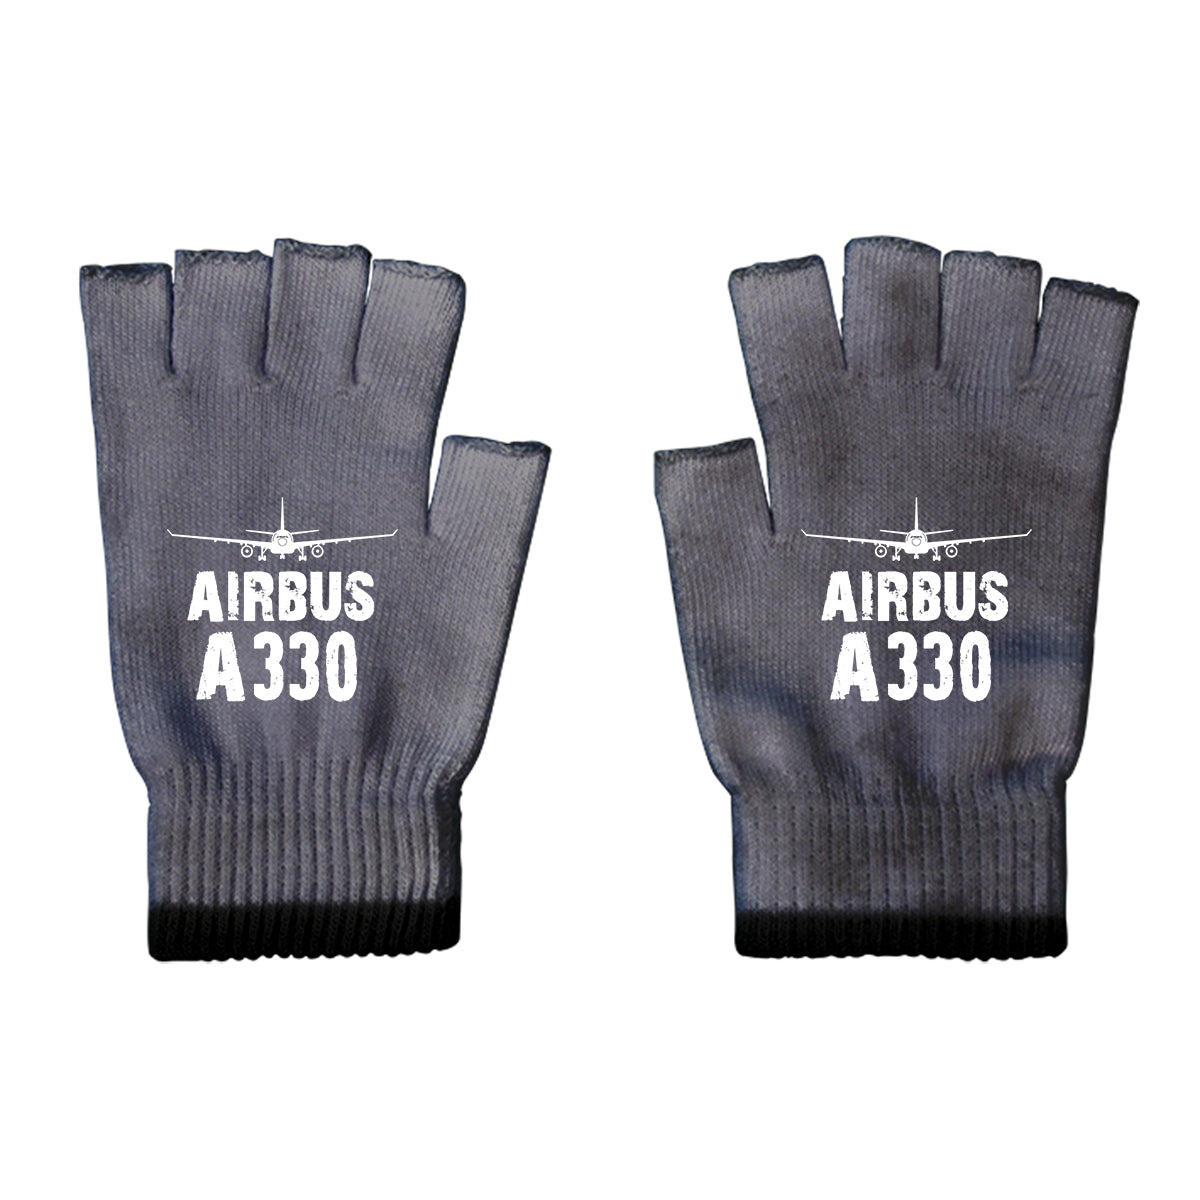 Airbus A330 & Plane Designed Cut Gloves